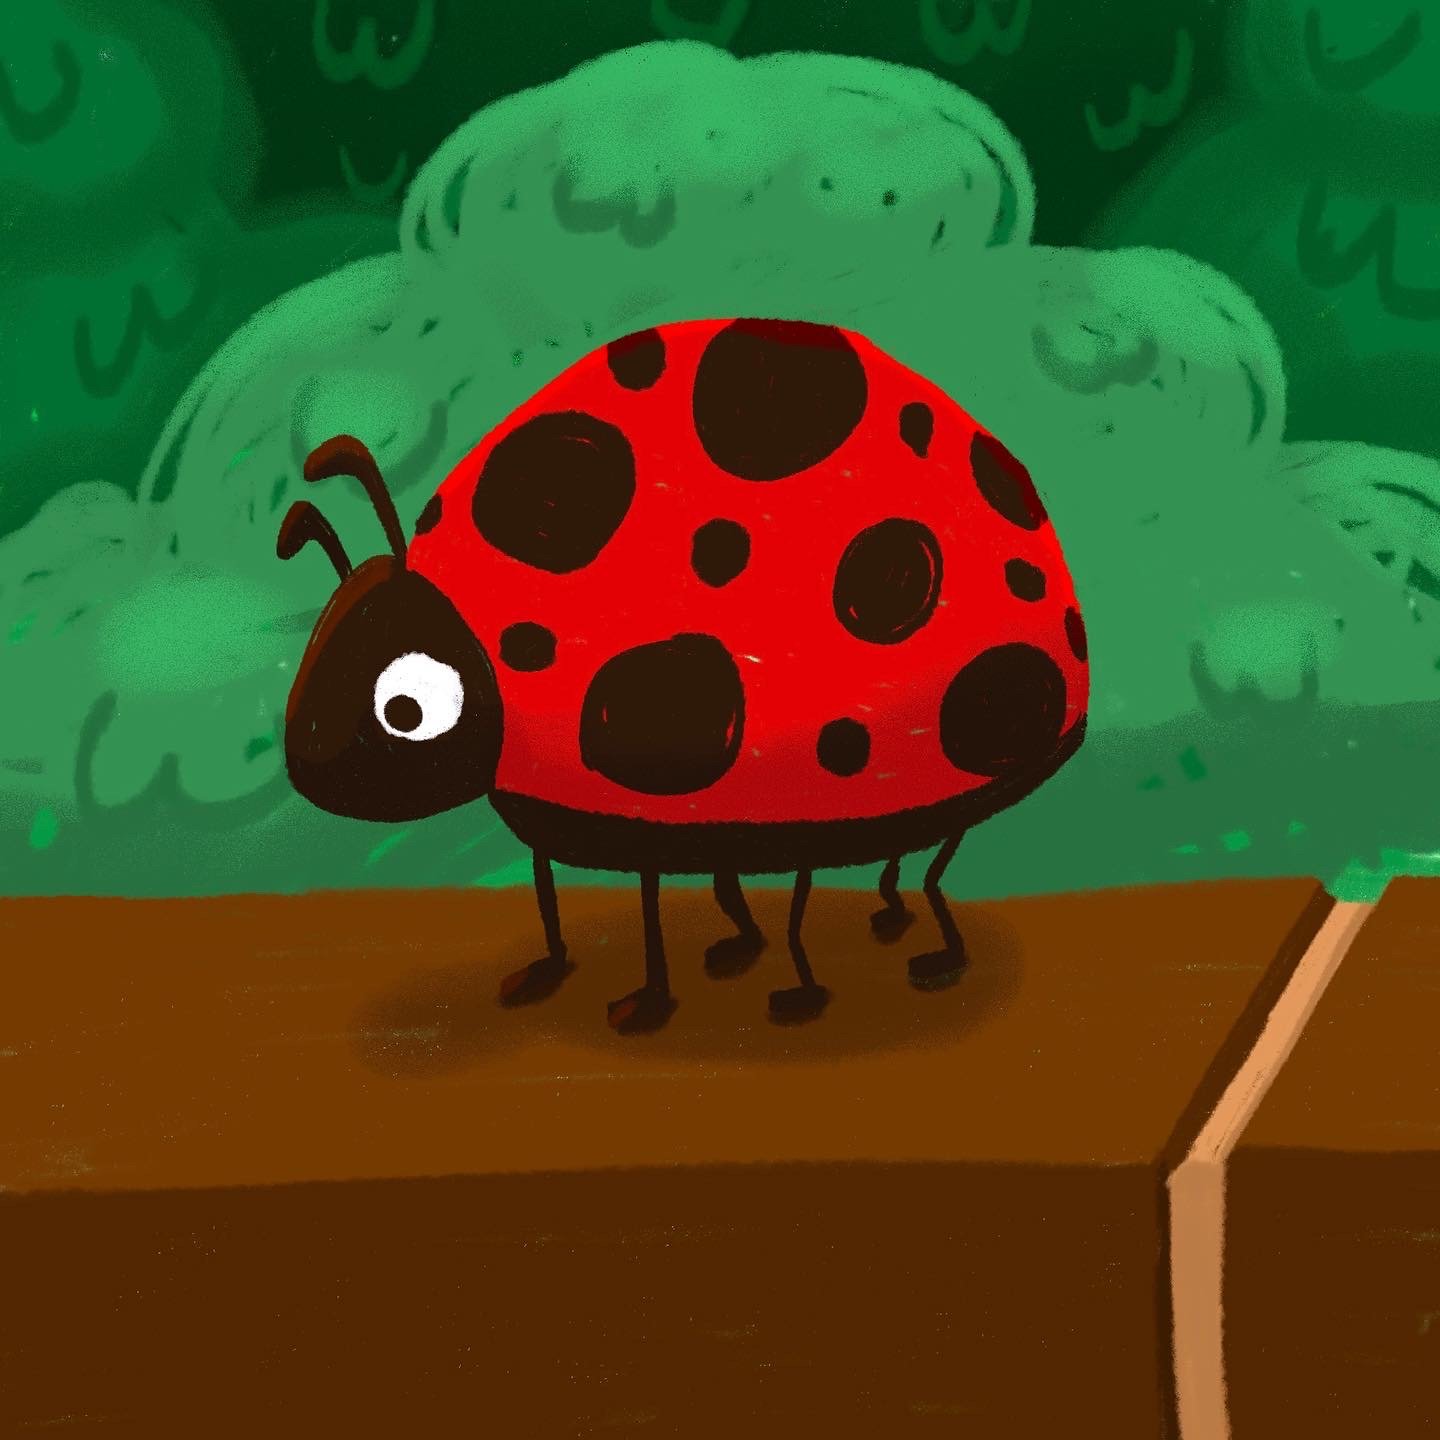 26: Ladybug